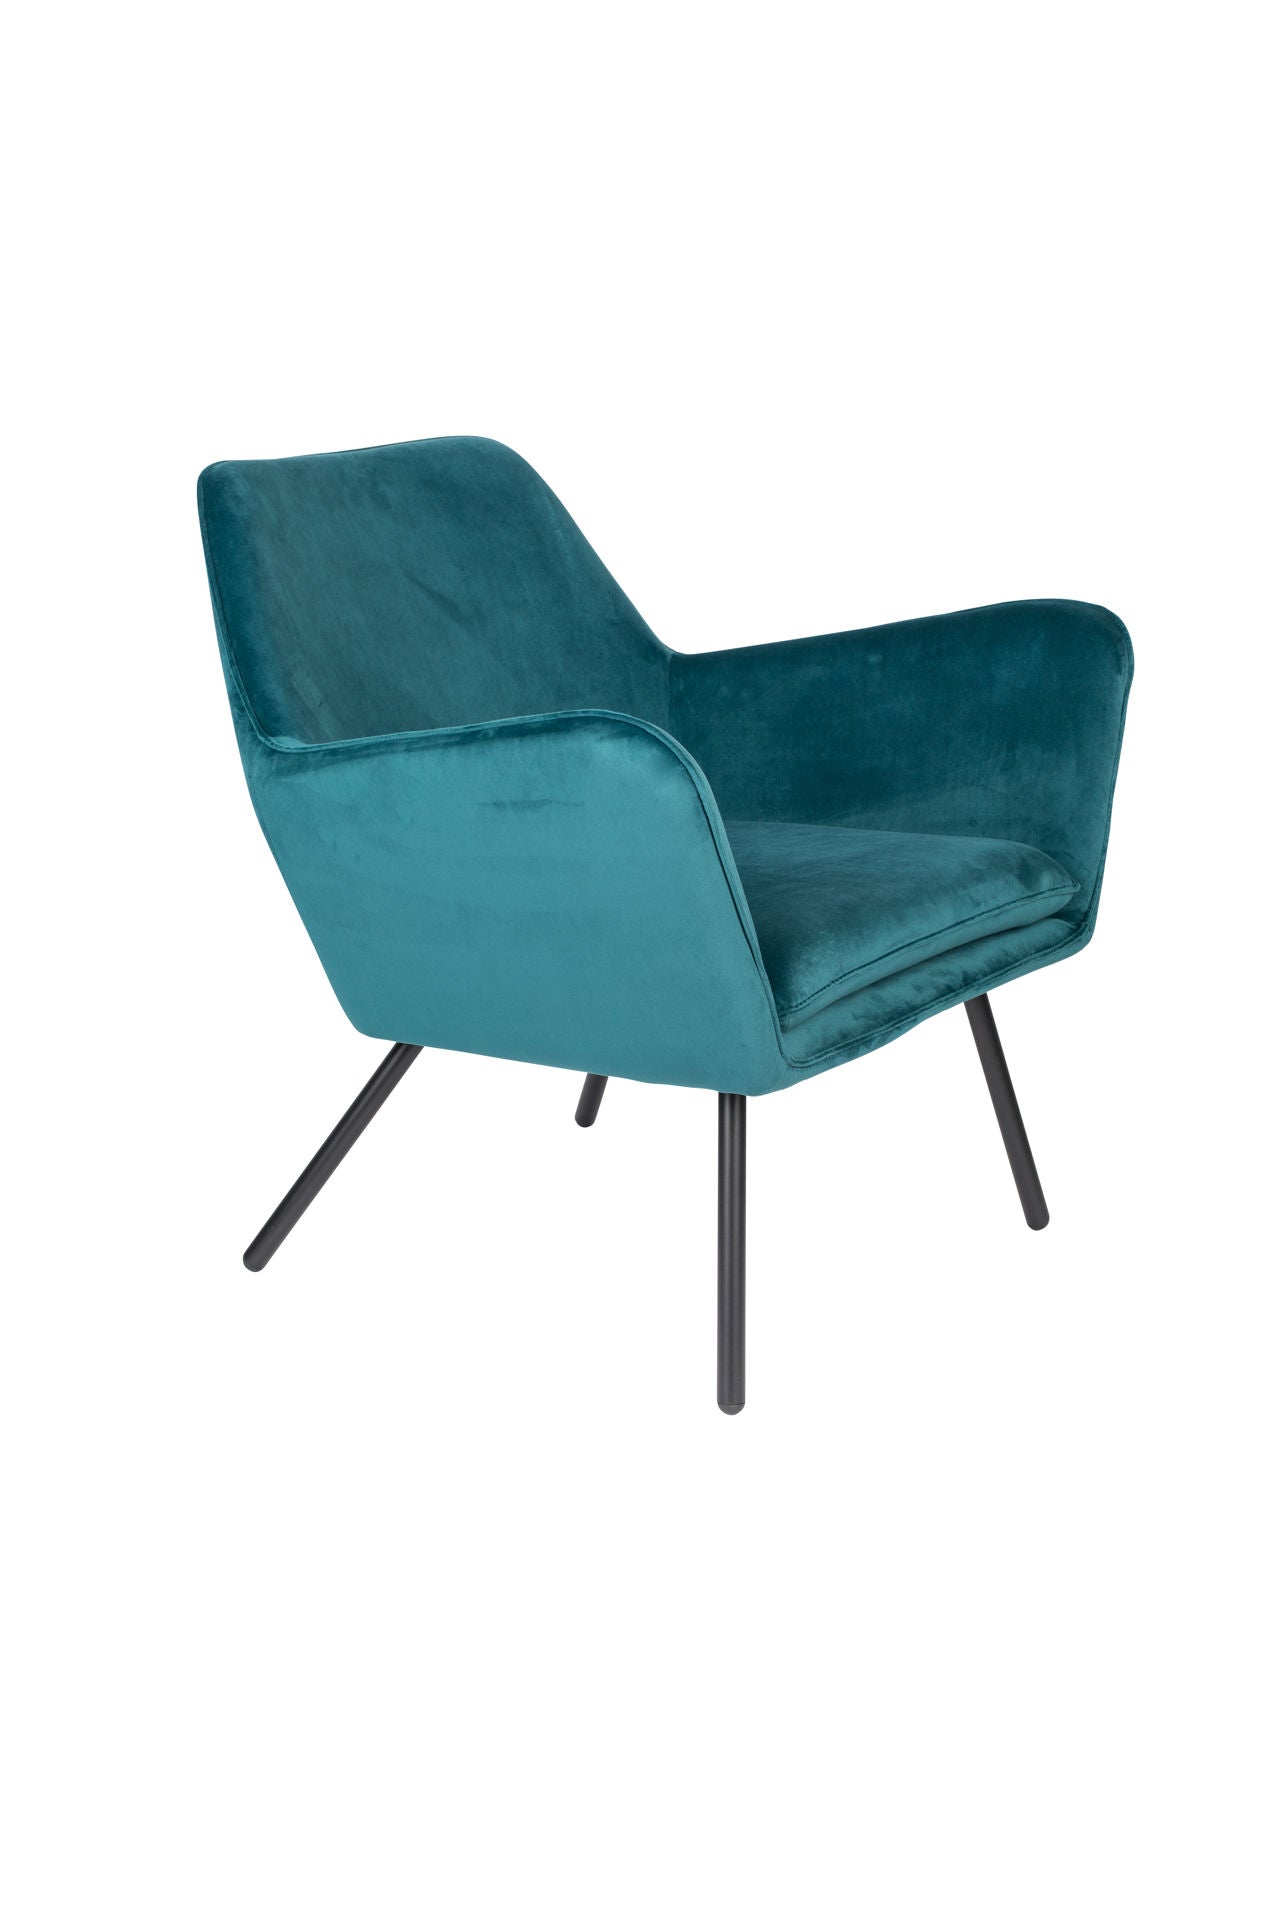 Nancy's Florida City Lounge Chair - Industrial - Blue- Velvet, Iron, Plywood - 76 cm x 80 cm x 78 cm